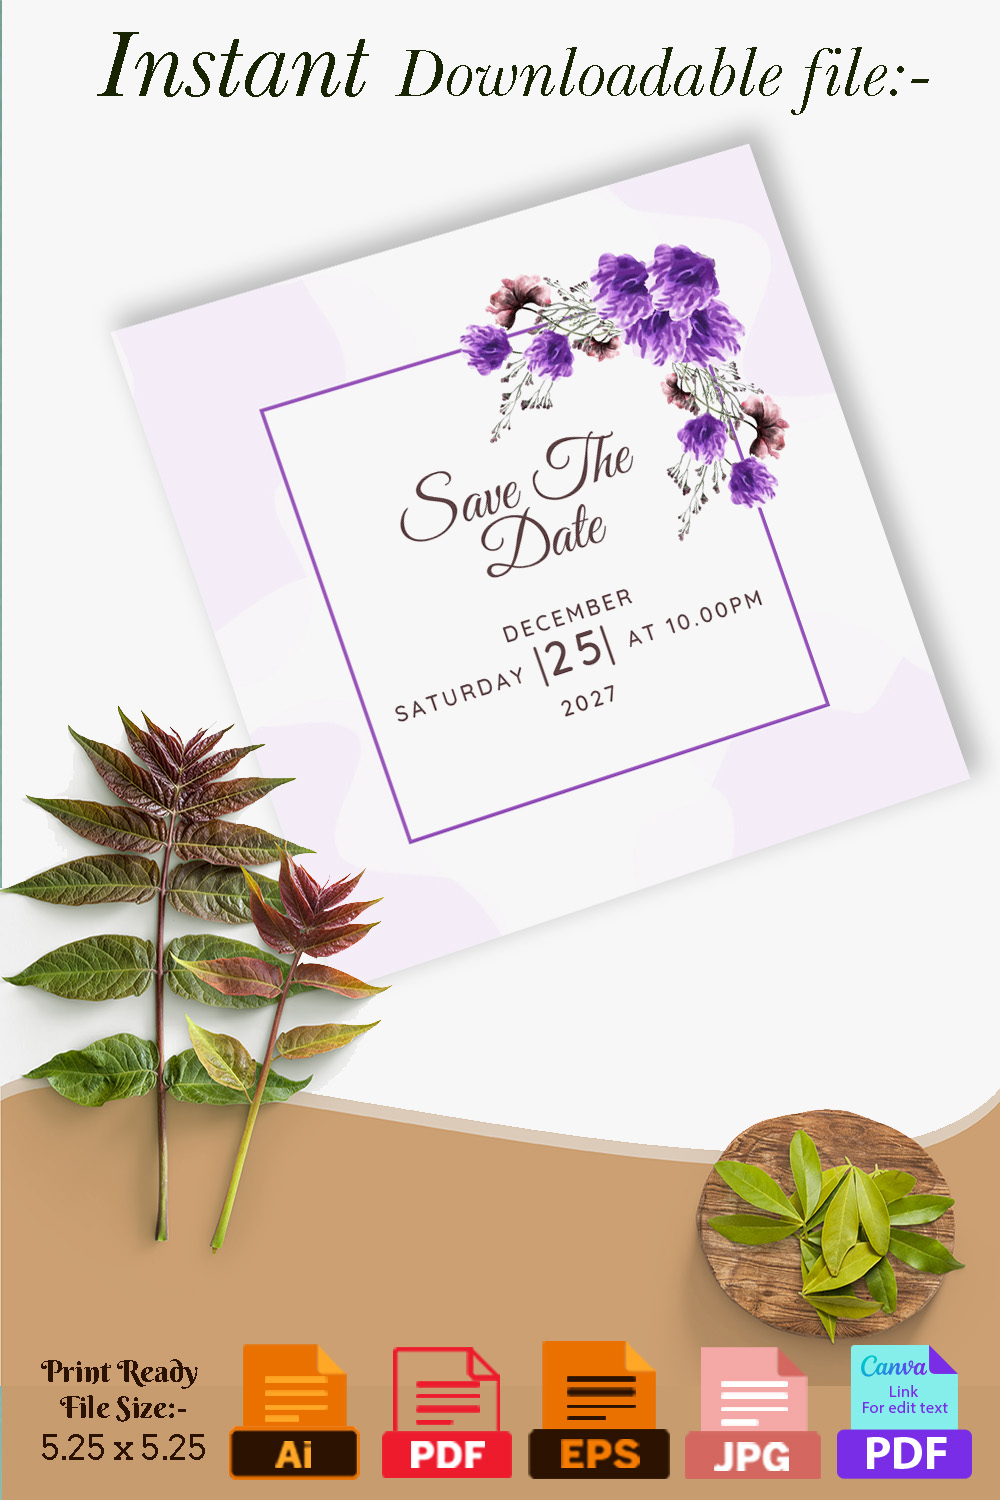 Purple Floral Wedding Invitation Card Design Pinterest image.